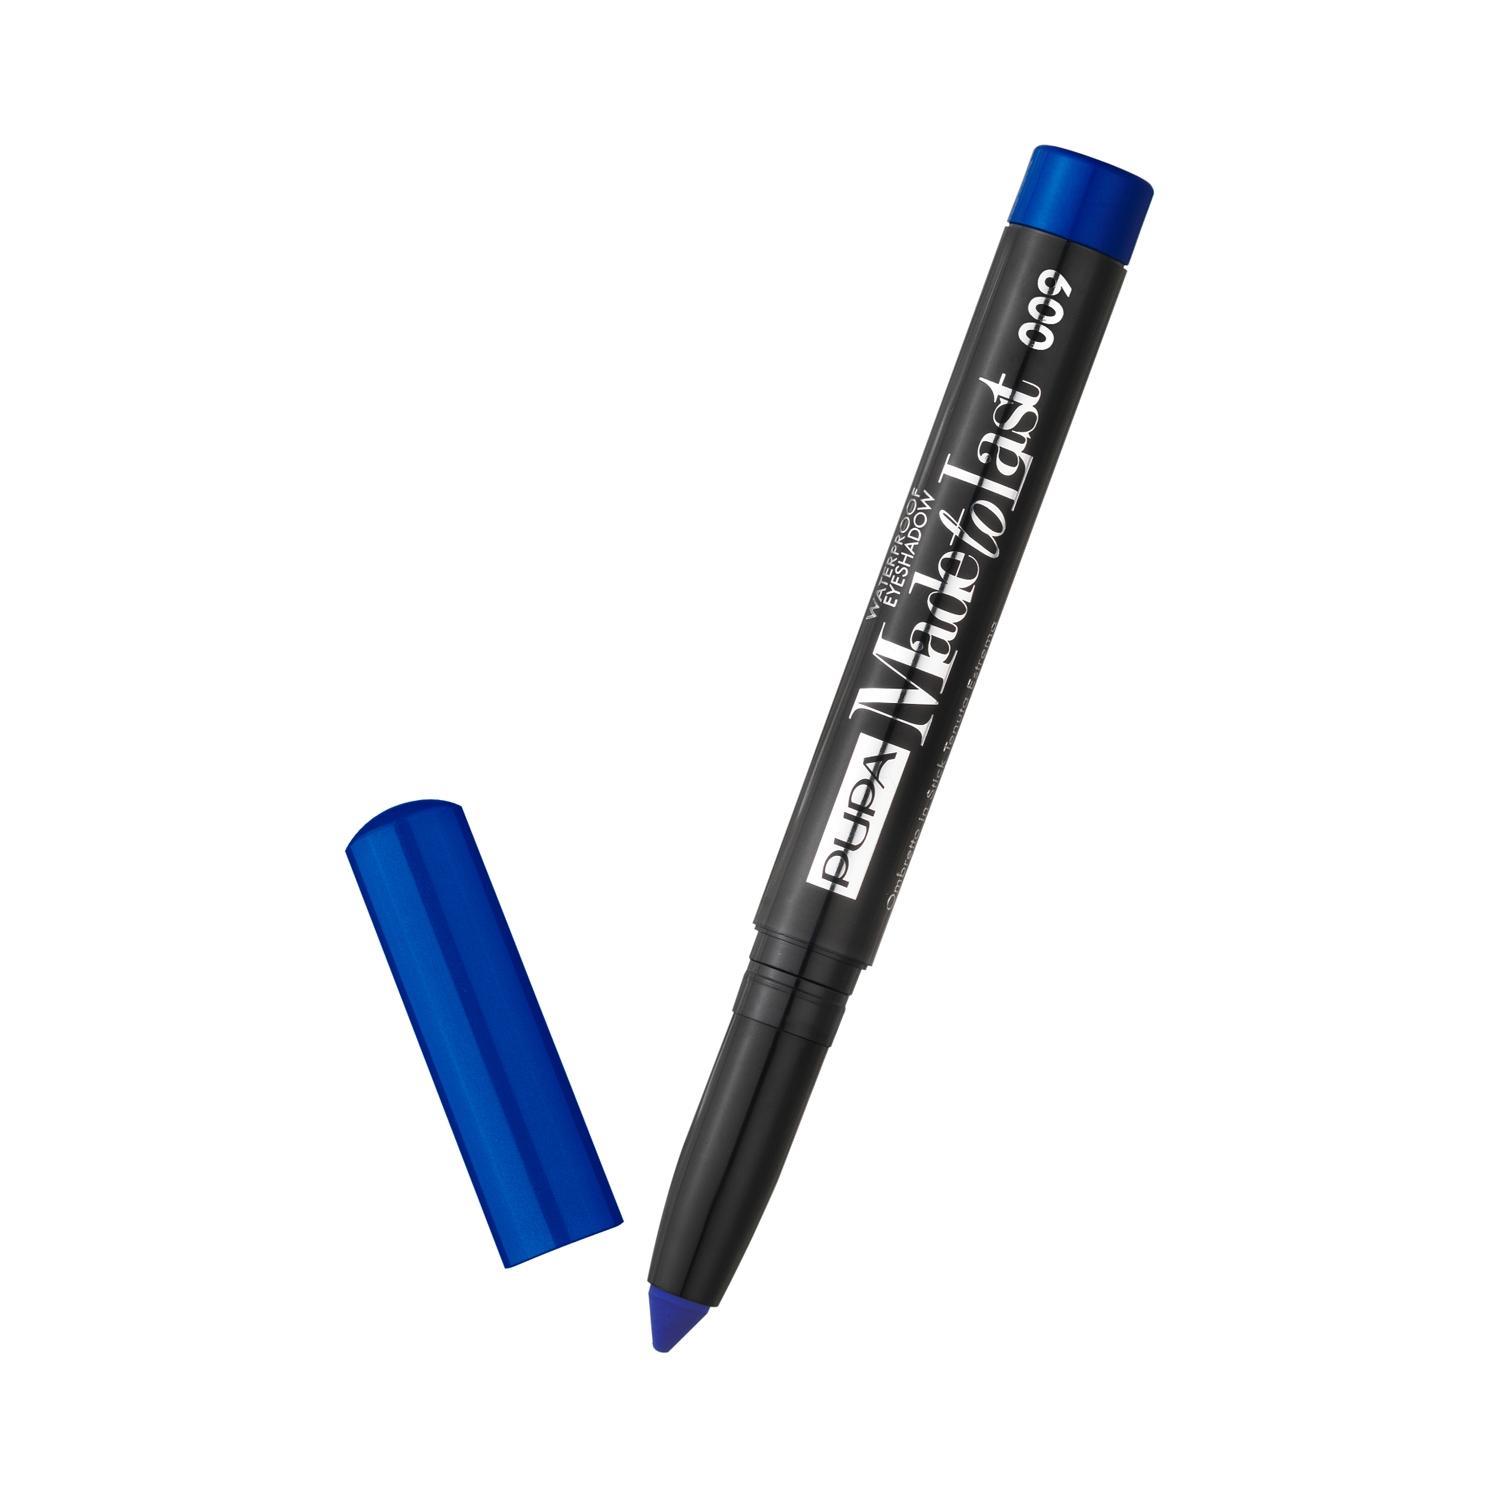 pupa milano made to last waterproof long lasting stick eyeshadow - 009 atlantic blue (1.4g)